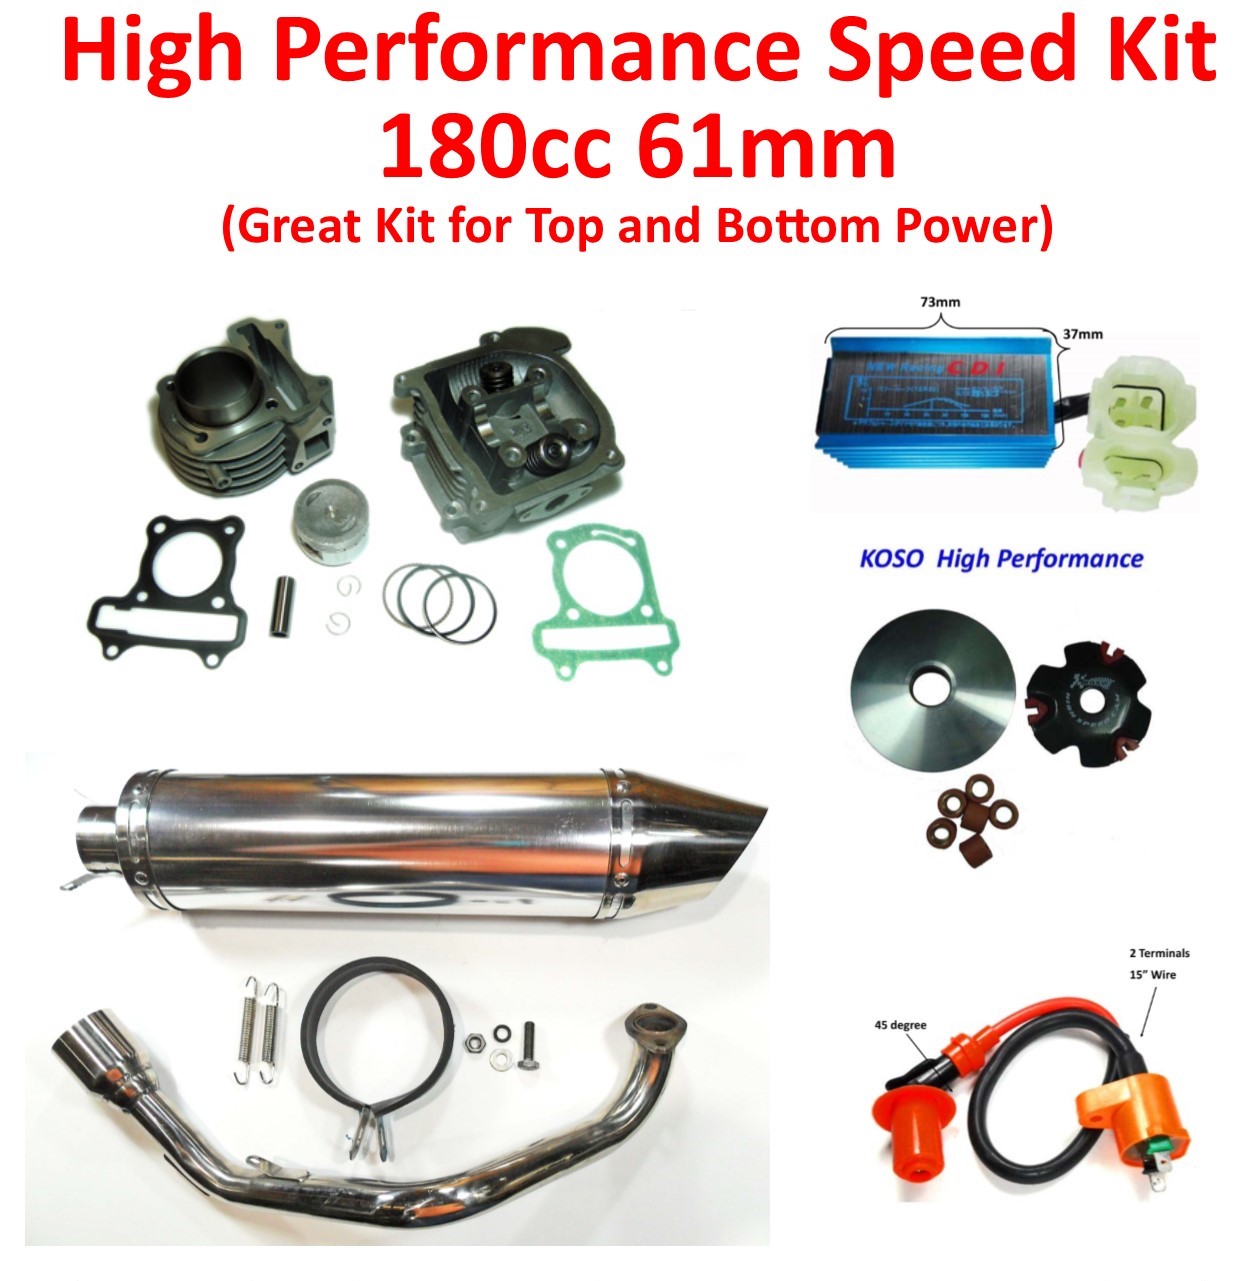 High Performance GY6-180cc (61mm) Speed Kit